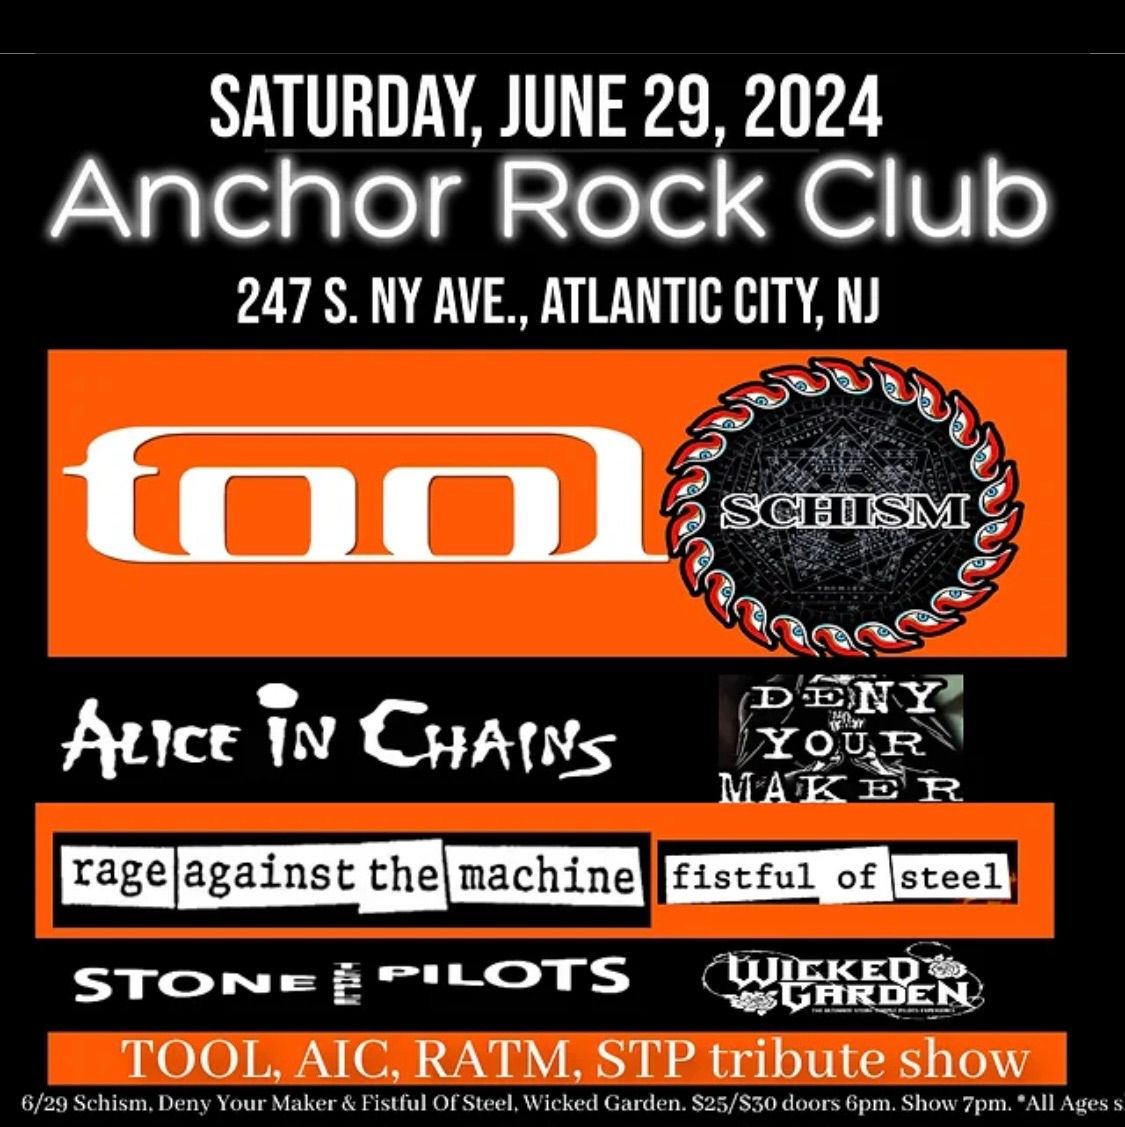 Deny Your Maker Live at the Anchor Rock Club Atlantic City NJ